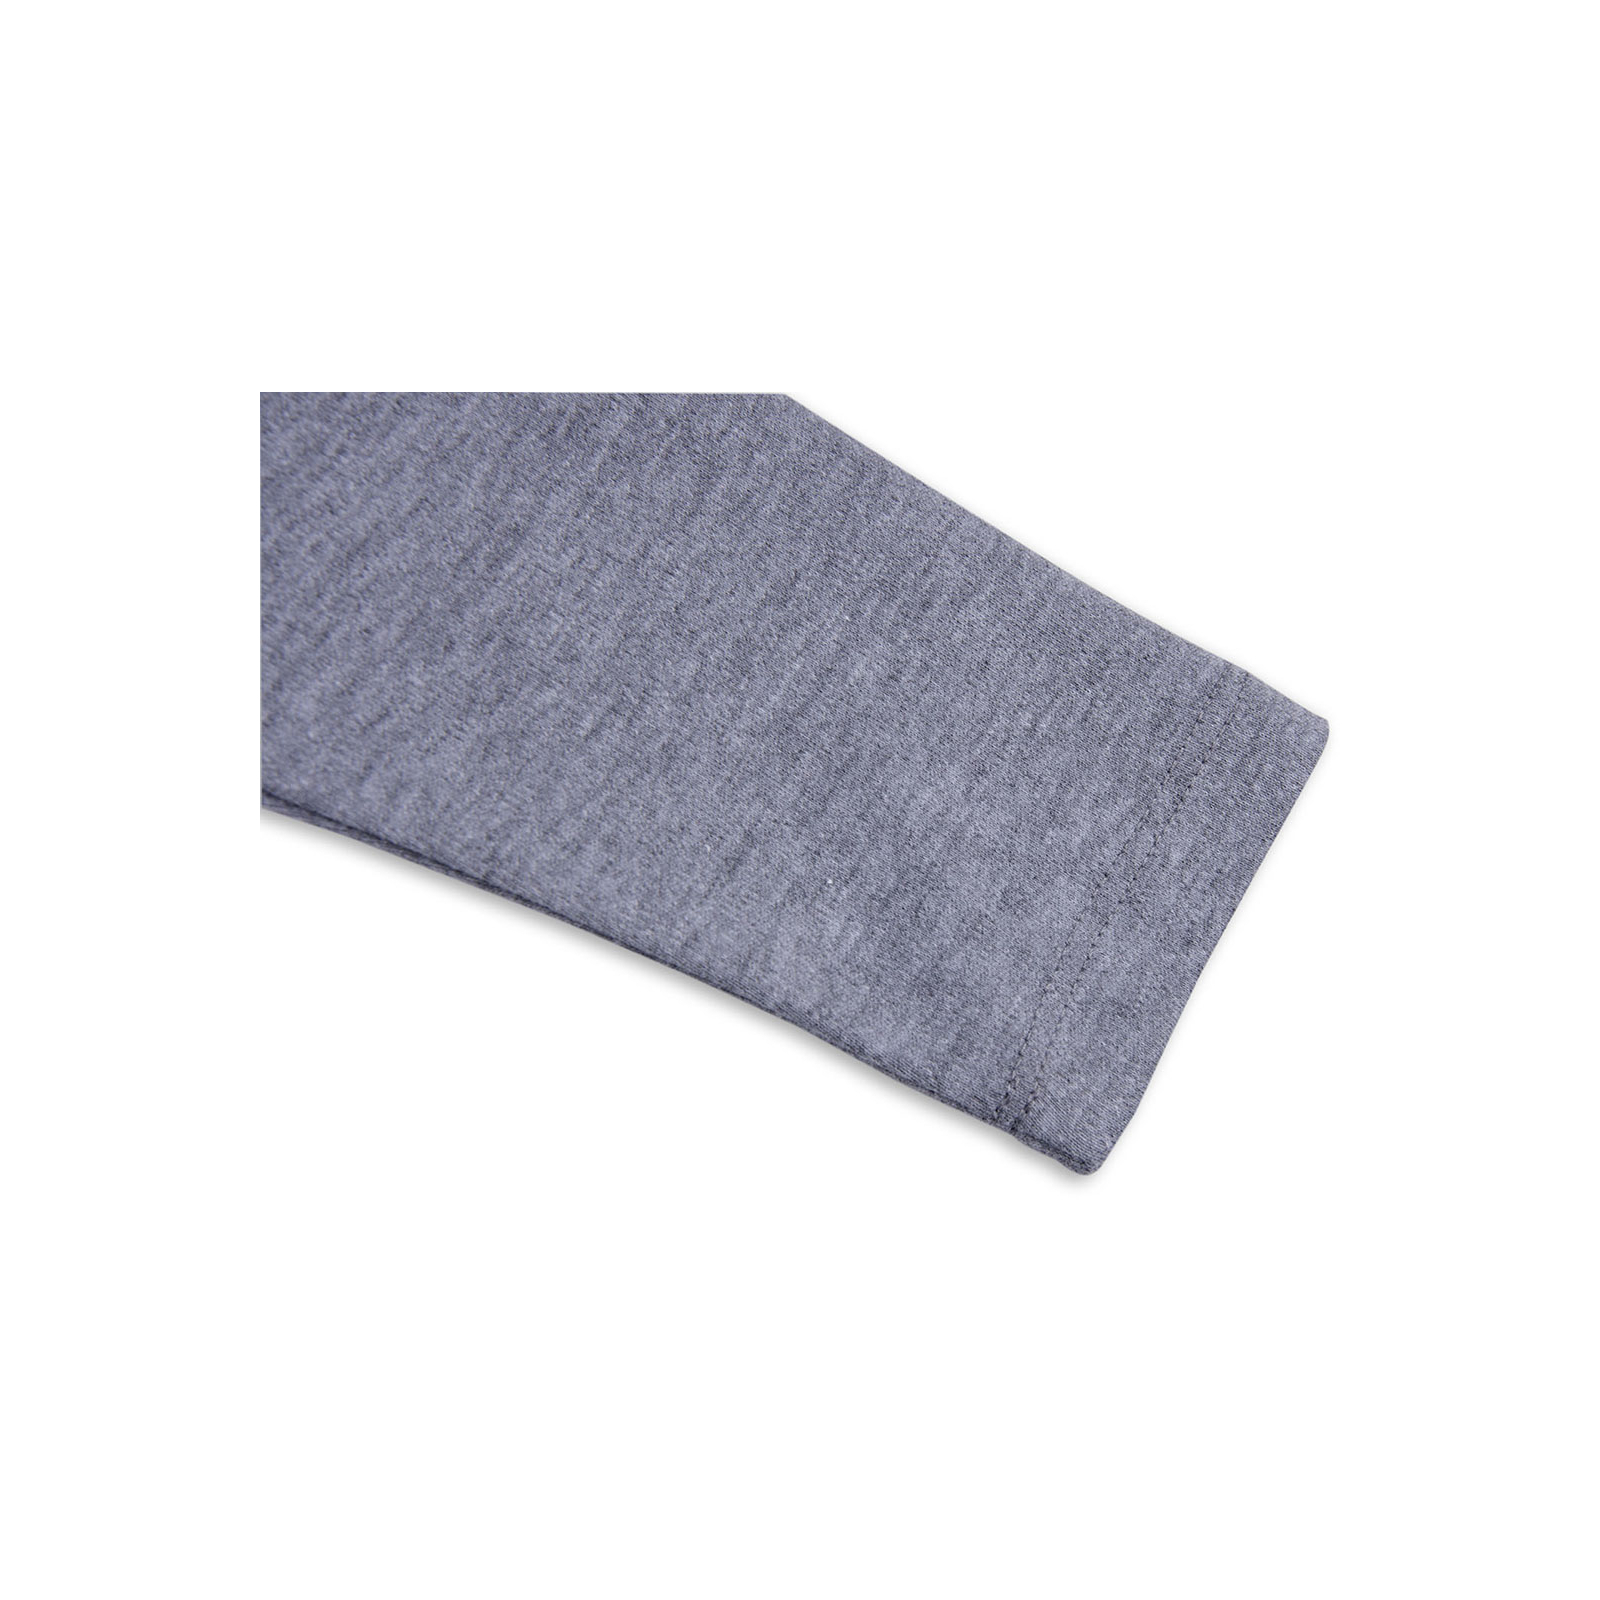 Кофта Lovetti водолазка серая меланжевая (1012-122-gray) изображение 4